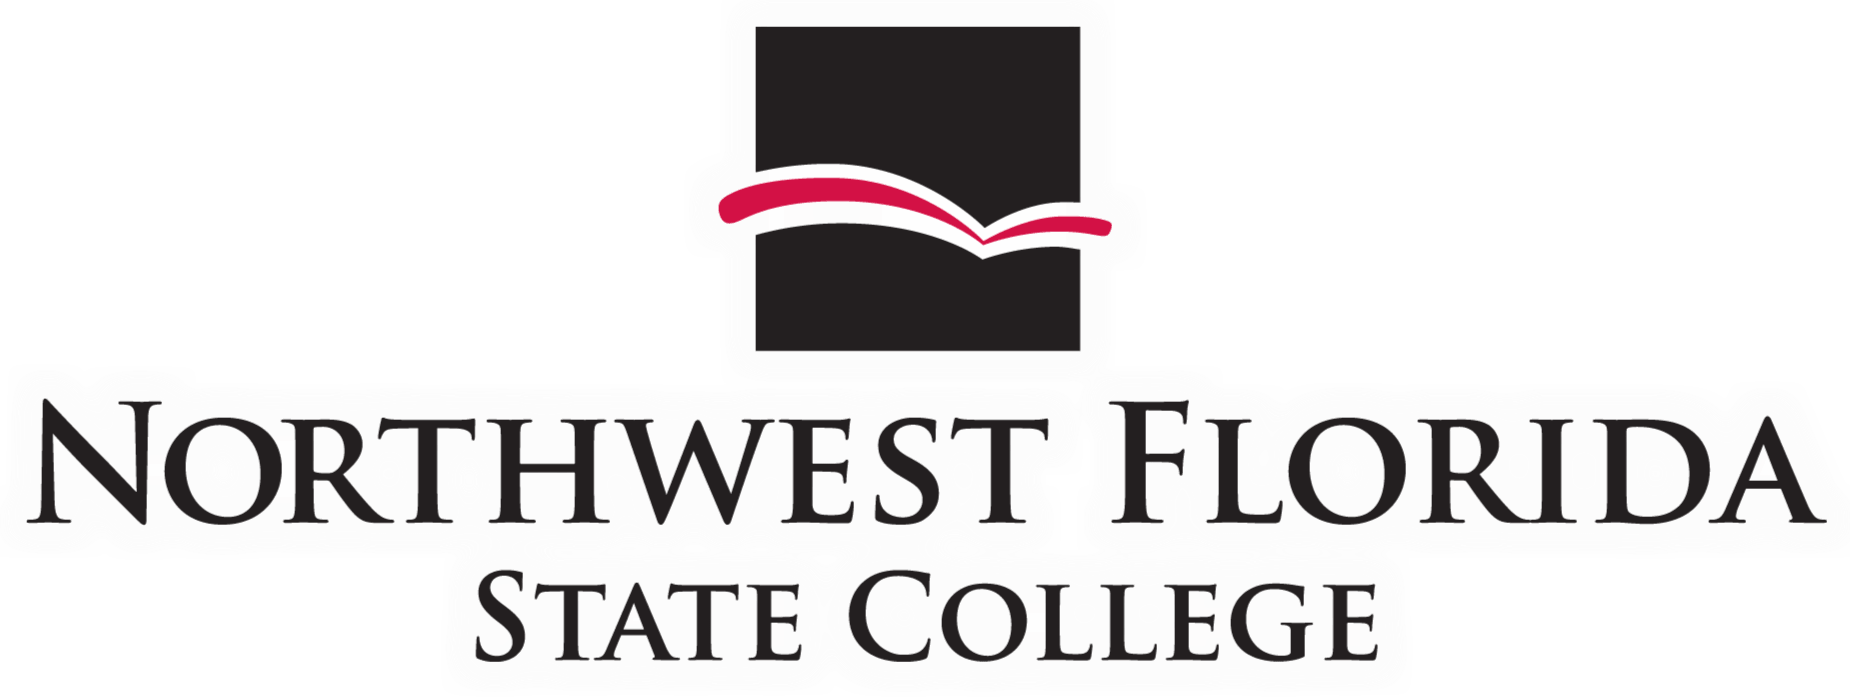 Florida State College Logo - Northwest Florida State College - Computer Technology | Academic ...